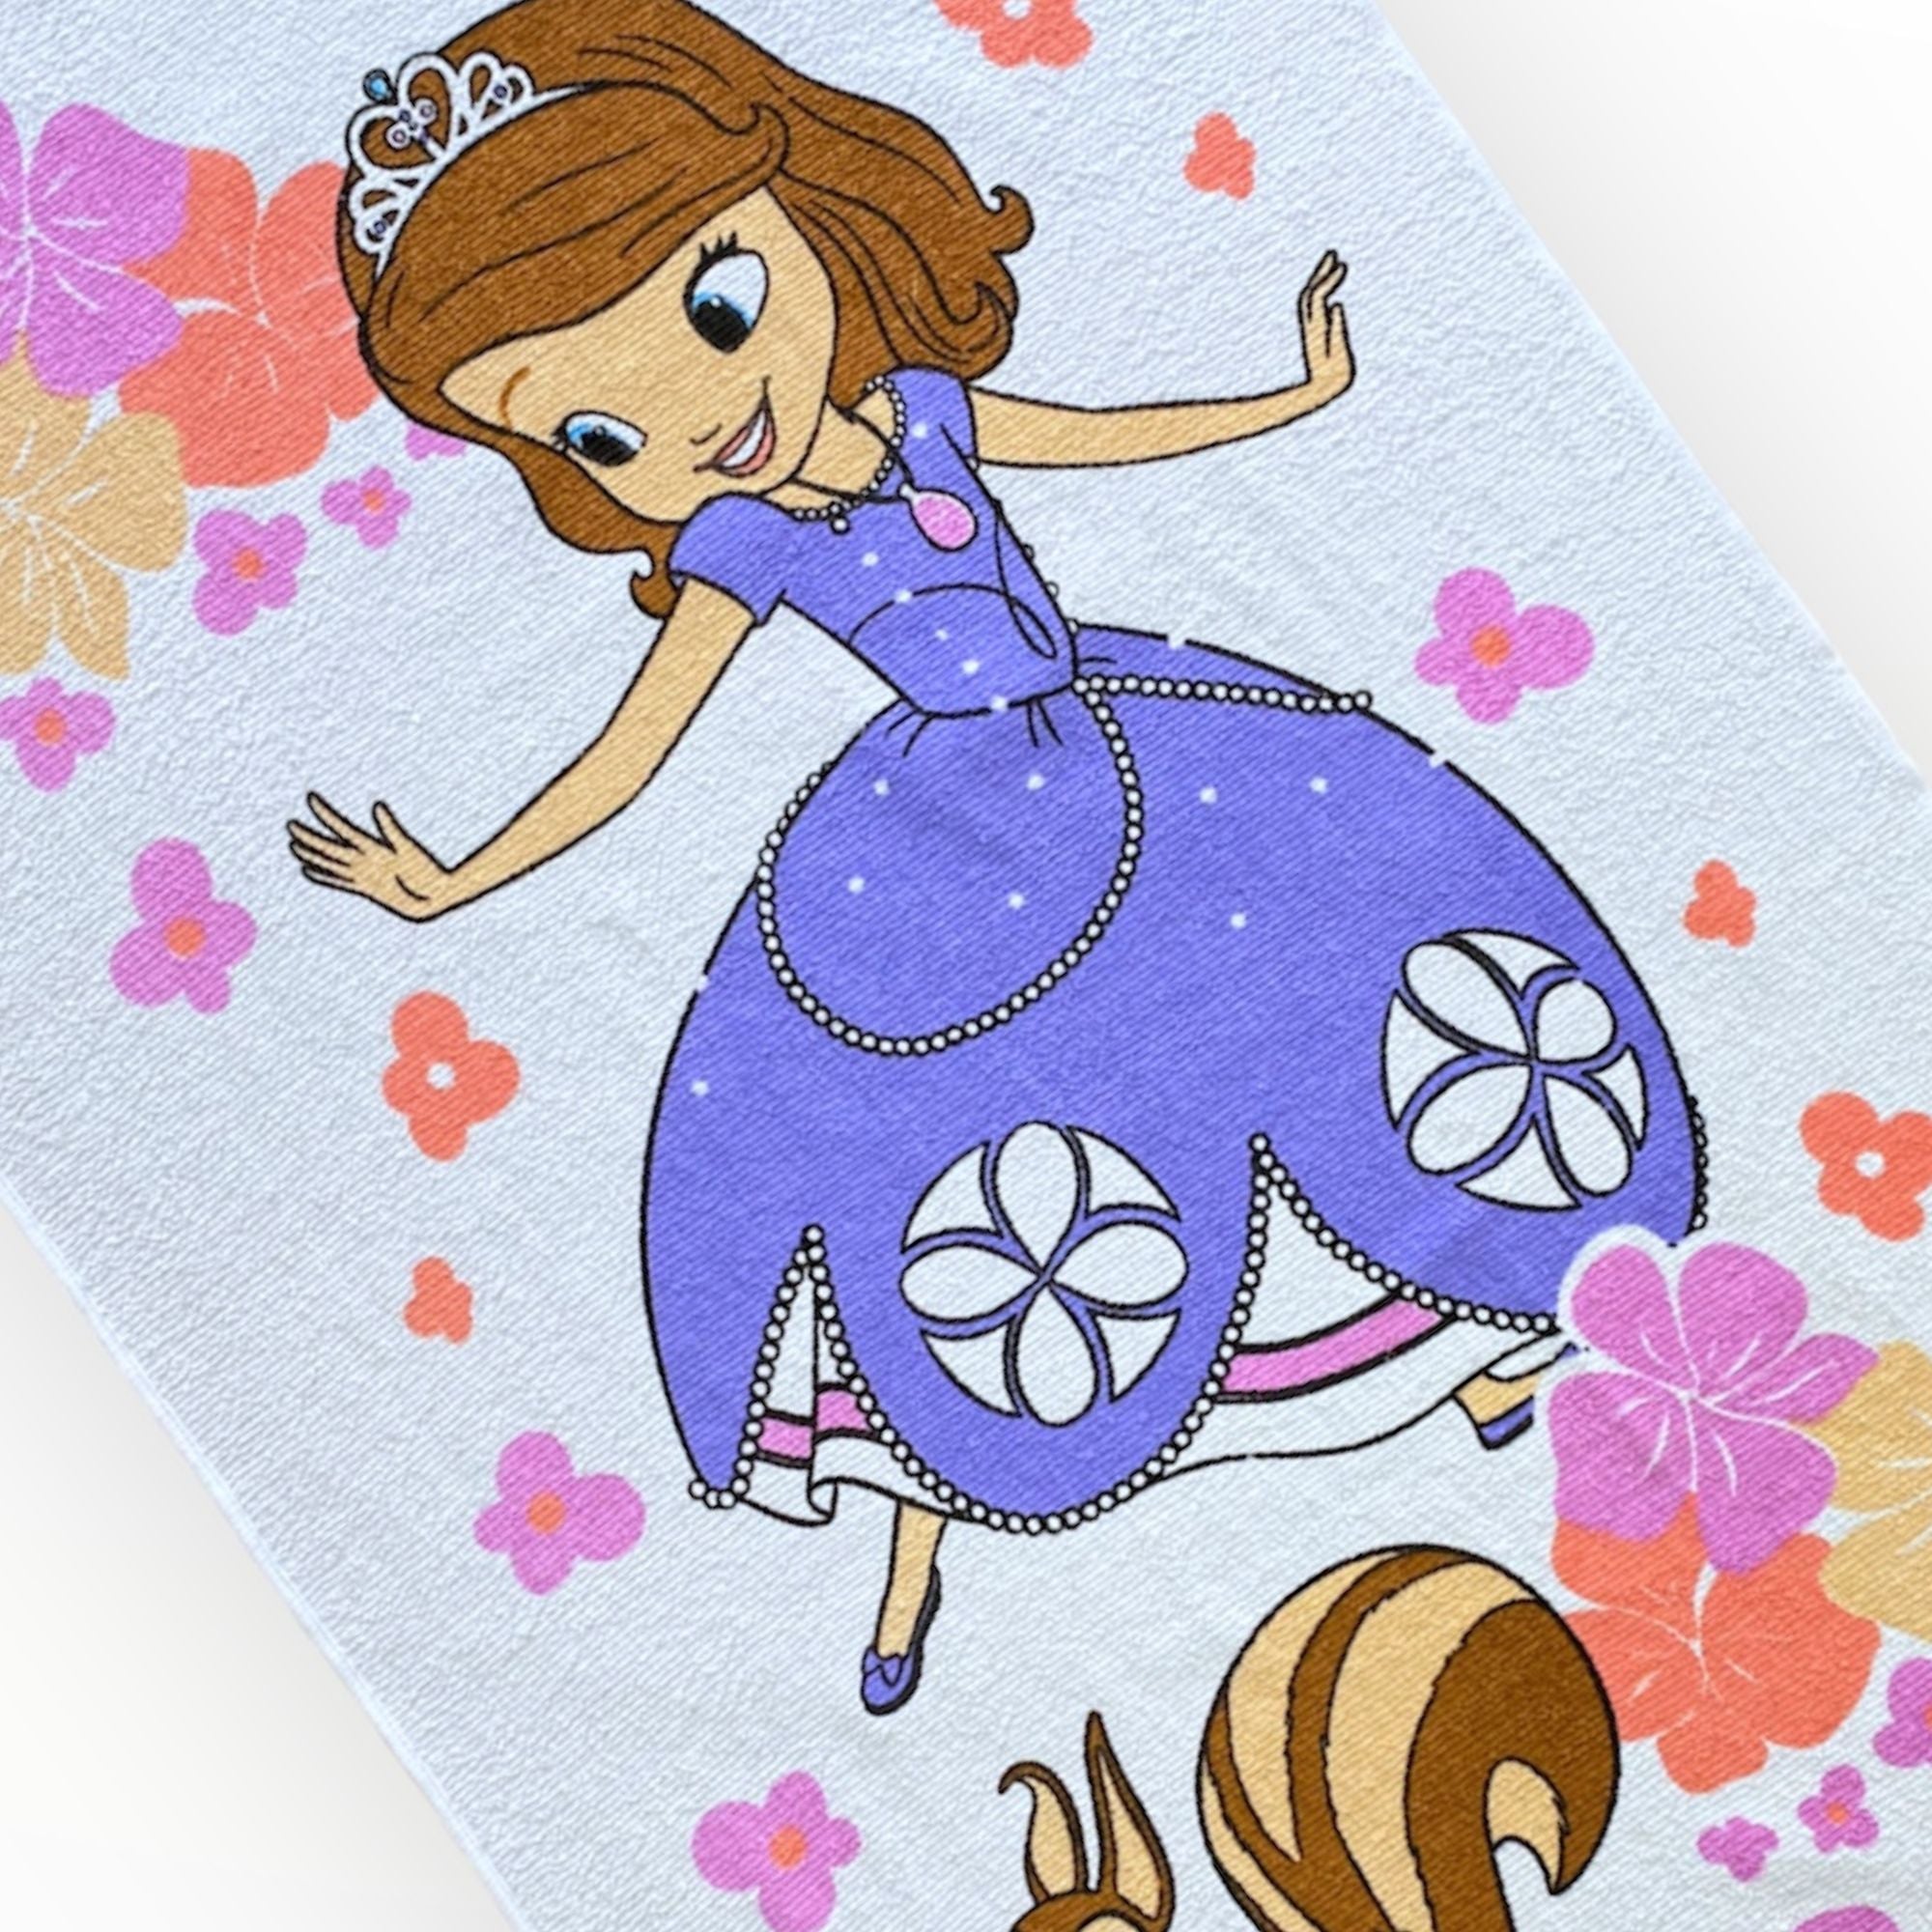 Toalla infantil Princesa Sofia de 60 x 120 cm.